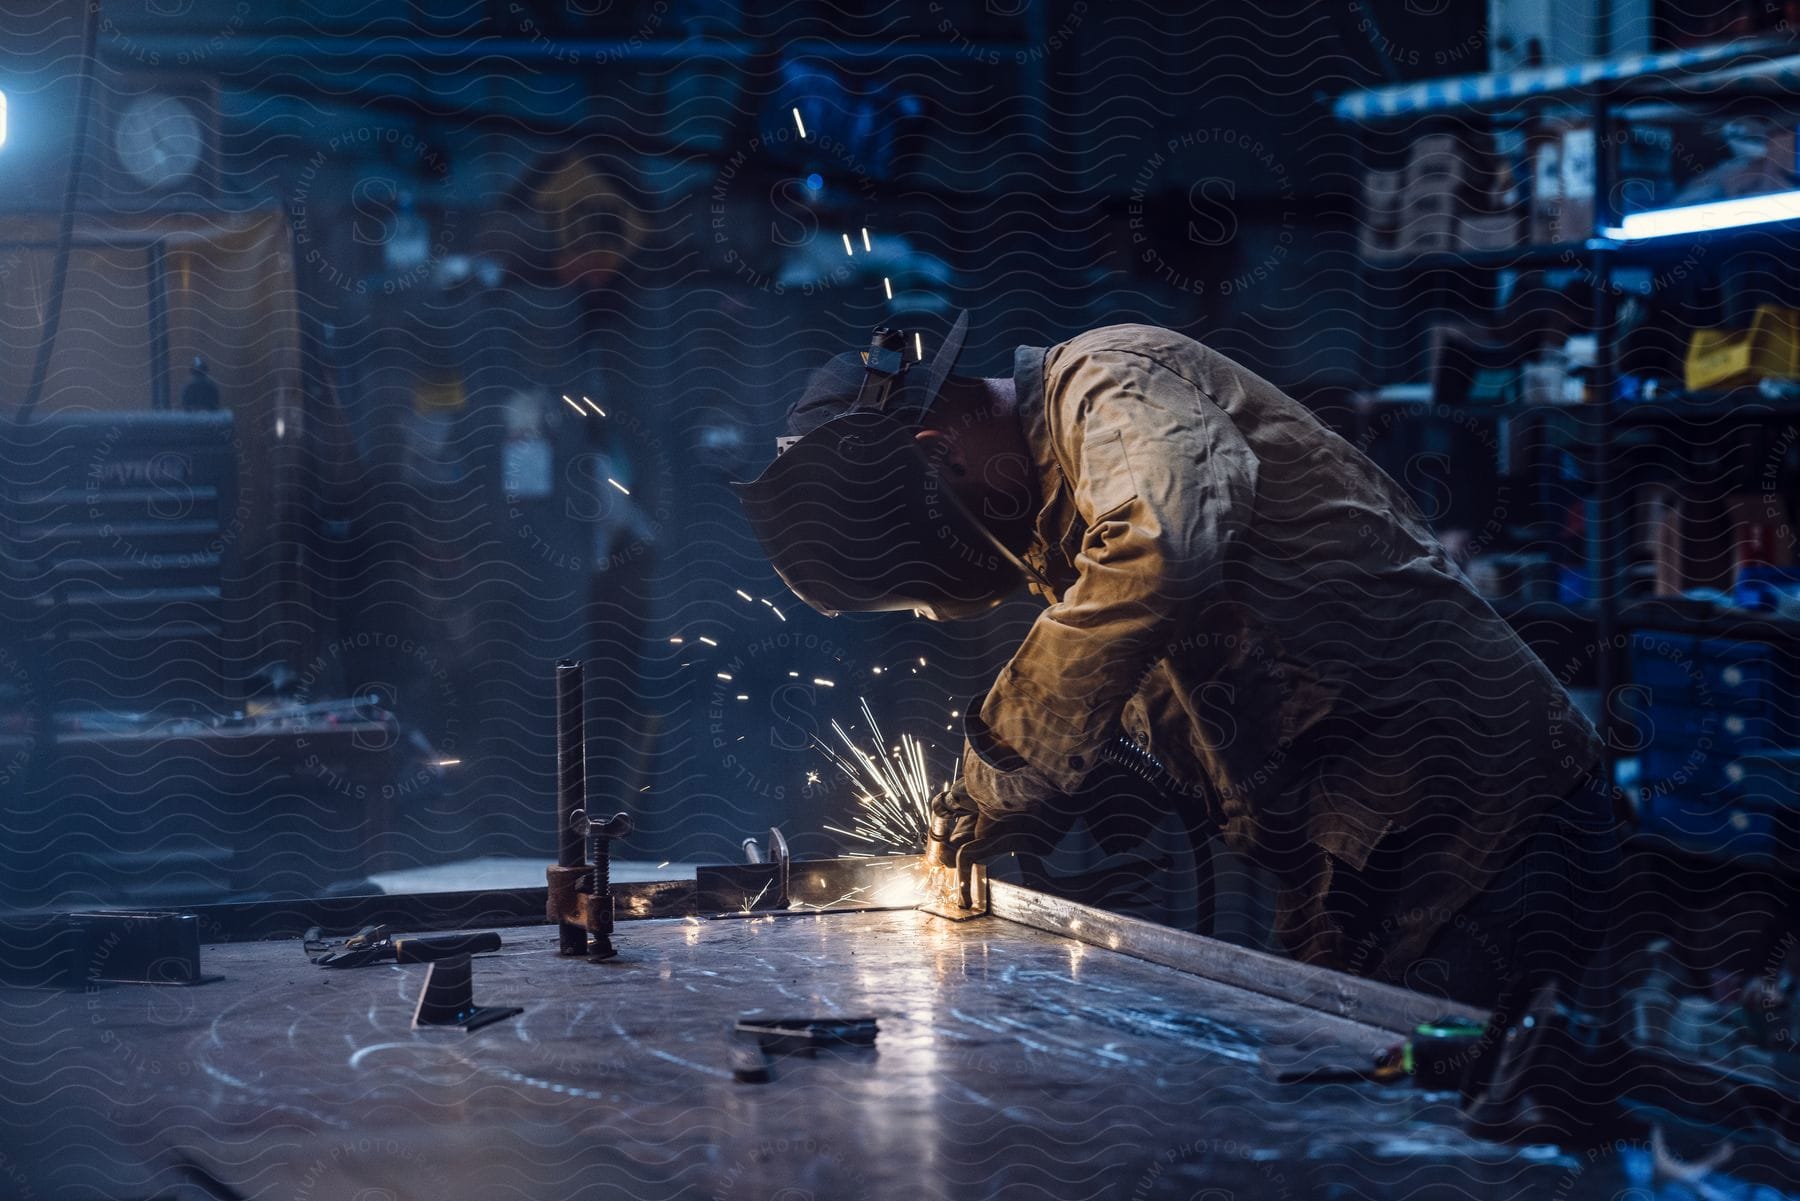 A man wearing a welding helmet while using a welder in a workshop in a dimly lit area